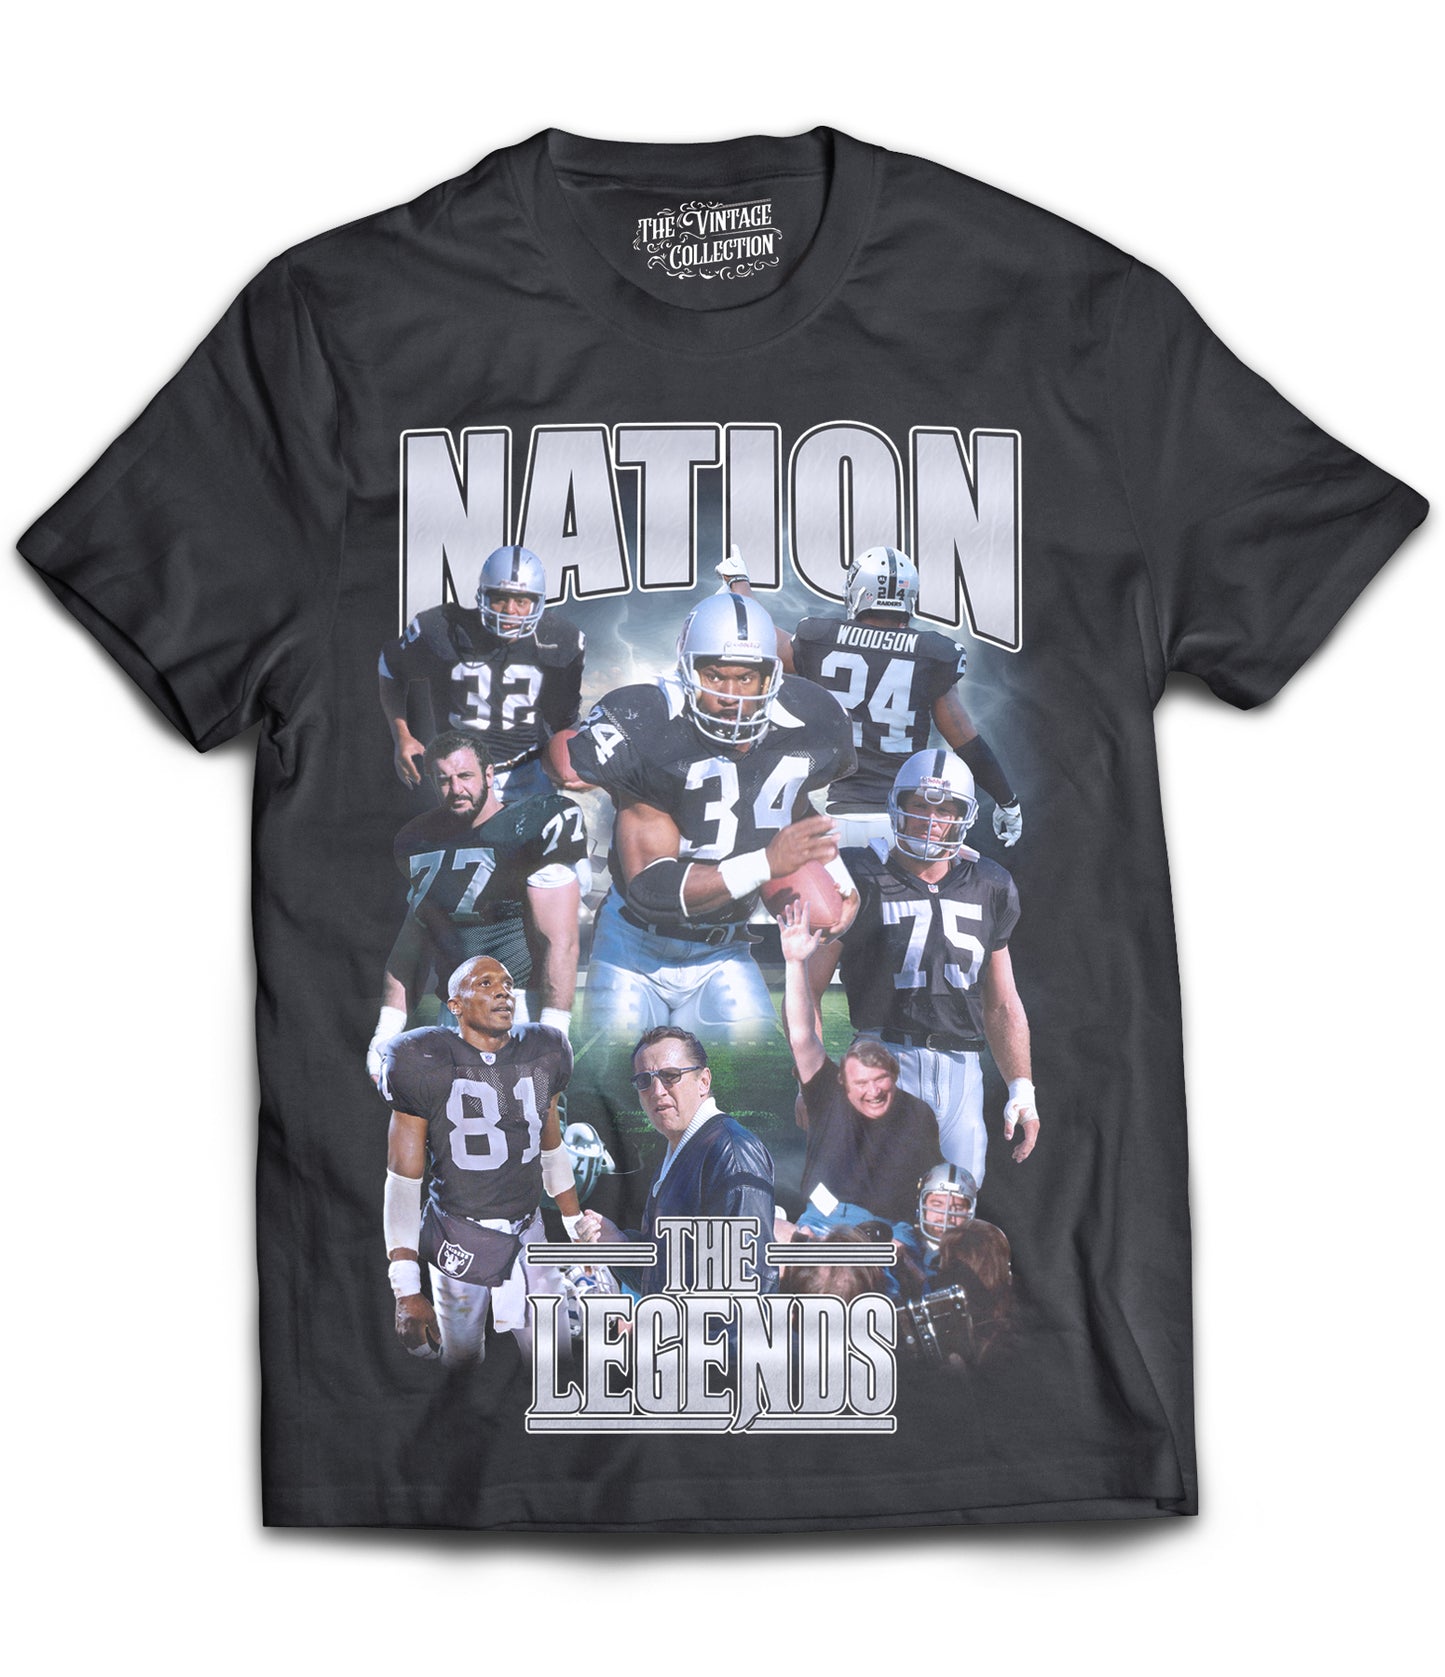 Raiders Nation "The Legends" Shirt (Black)